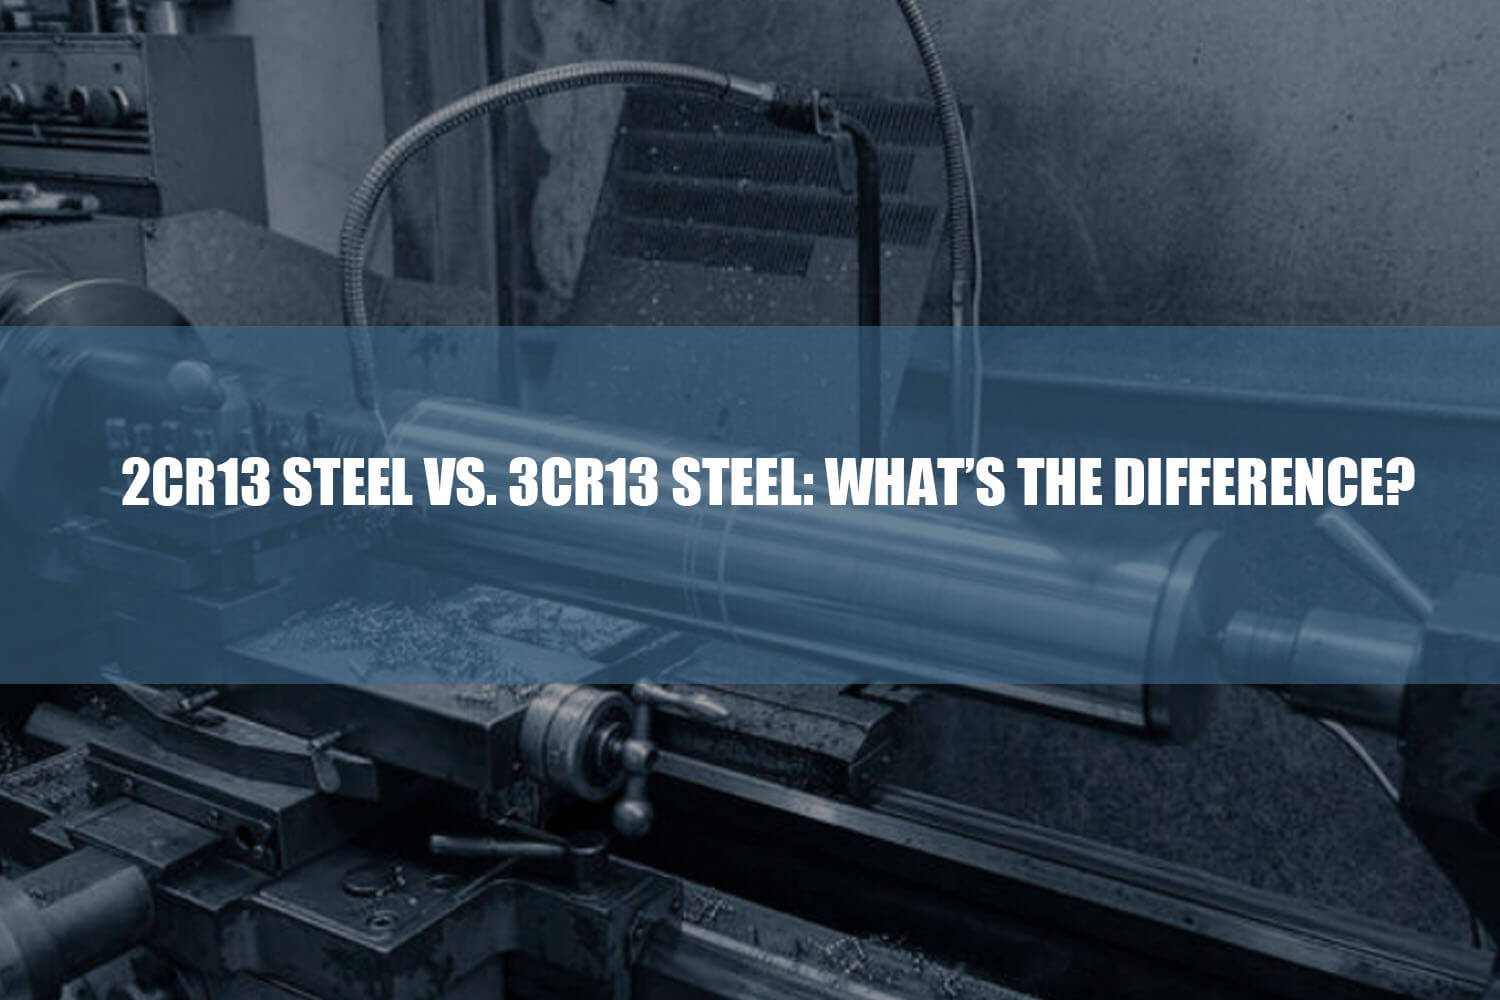 2cr13 steel vs 3cr13 steel